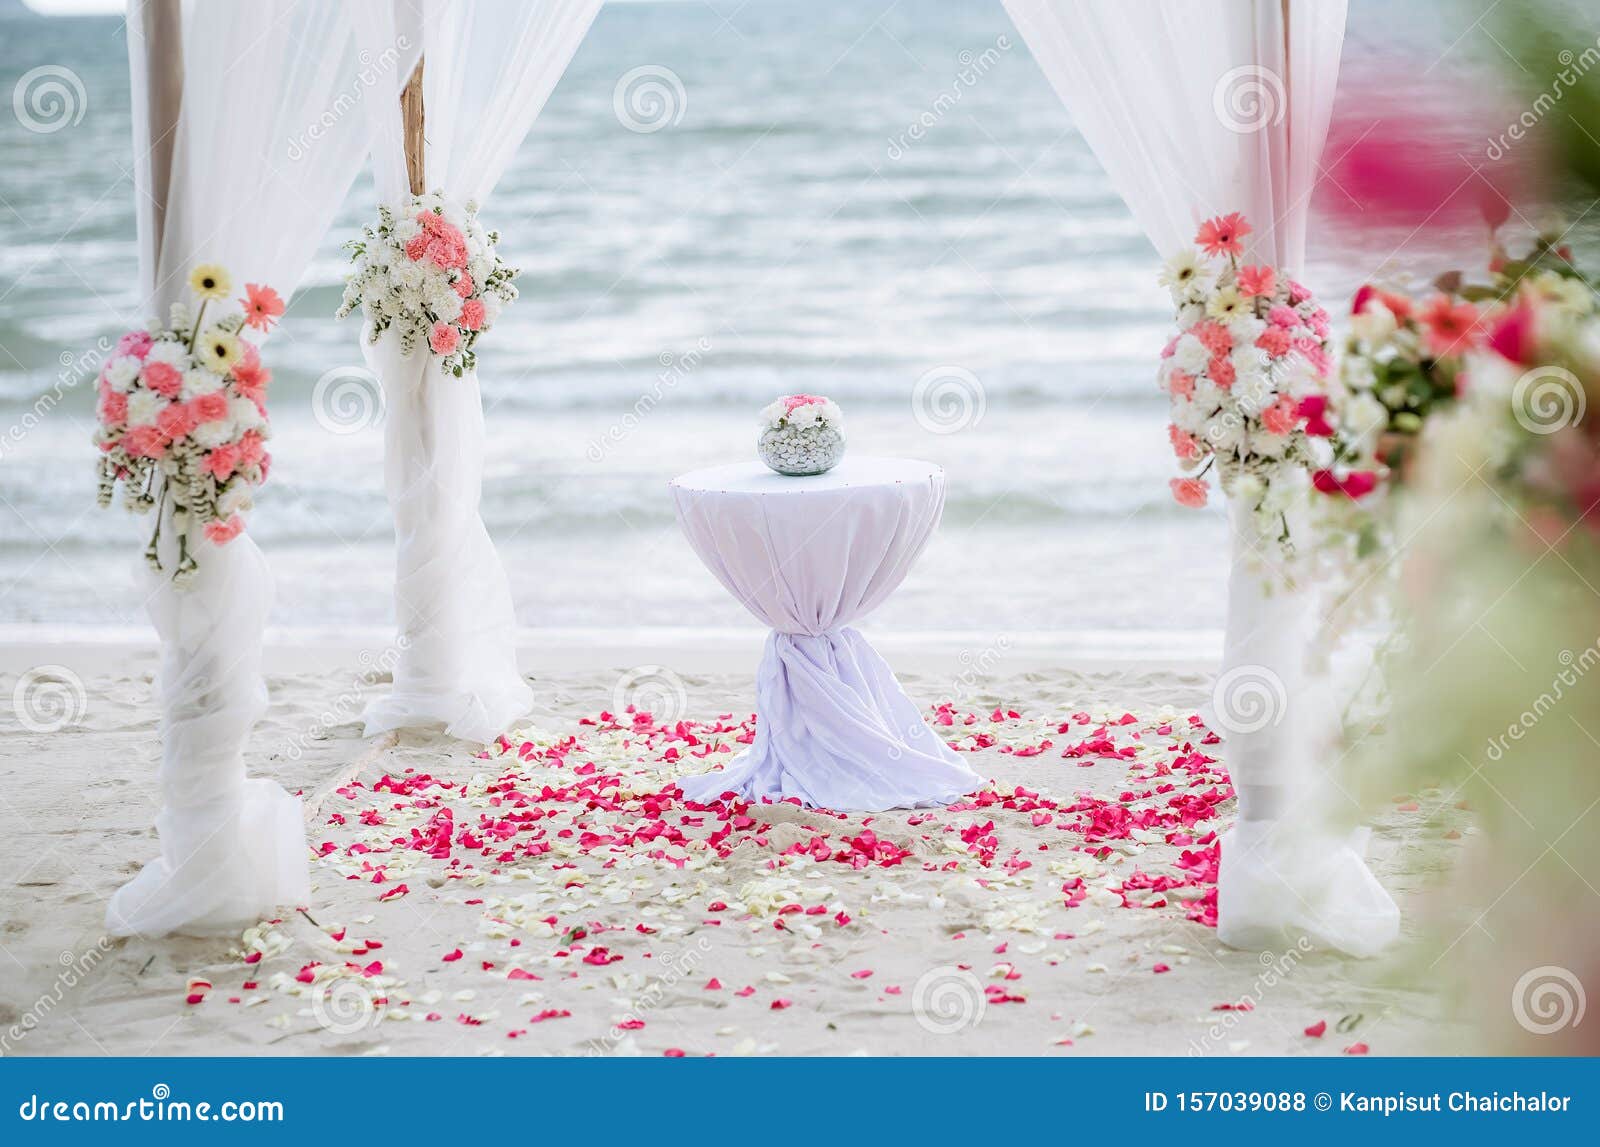 Romantic Wedding Ceremony on the Beach. Wedding Setting on the Beach.  Flowers Wedding Ceremony by the Sea Stock Photo - Image of decoration,  lantern: 157039088